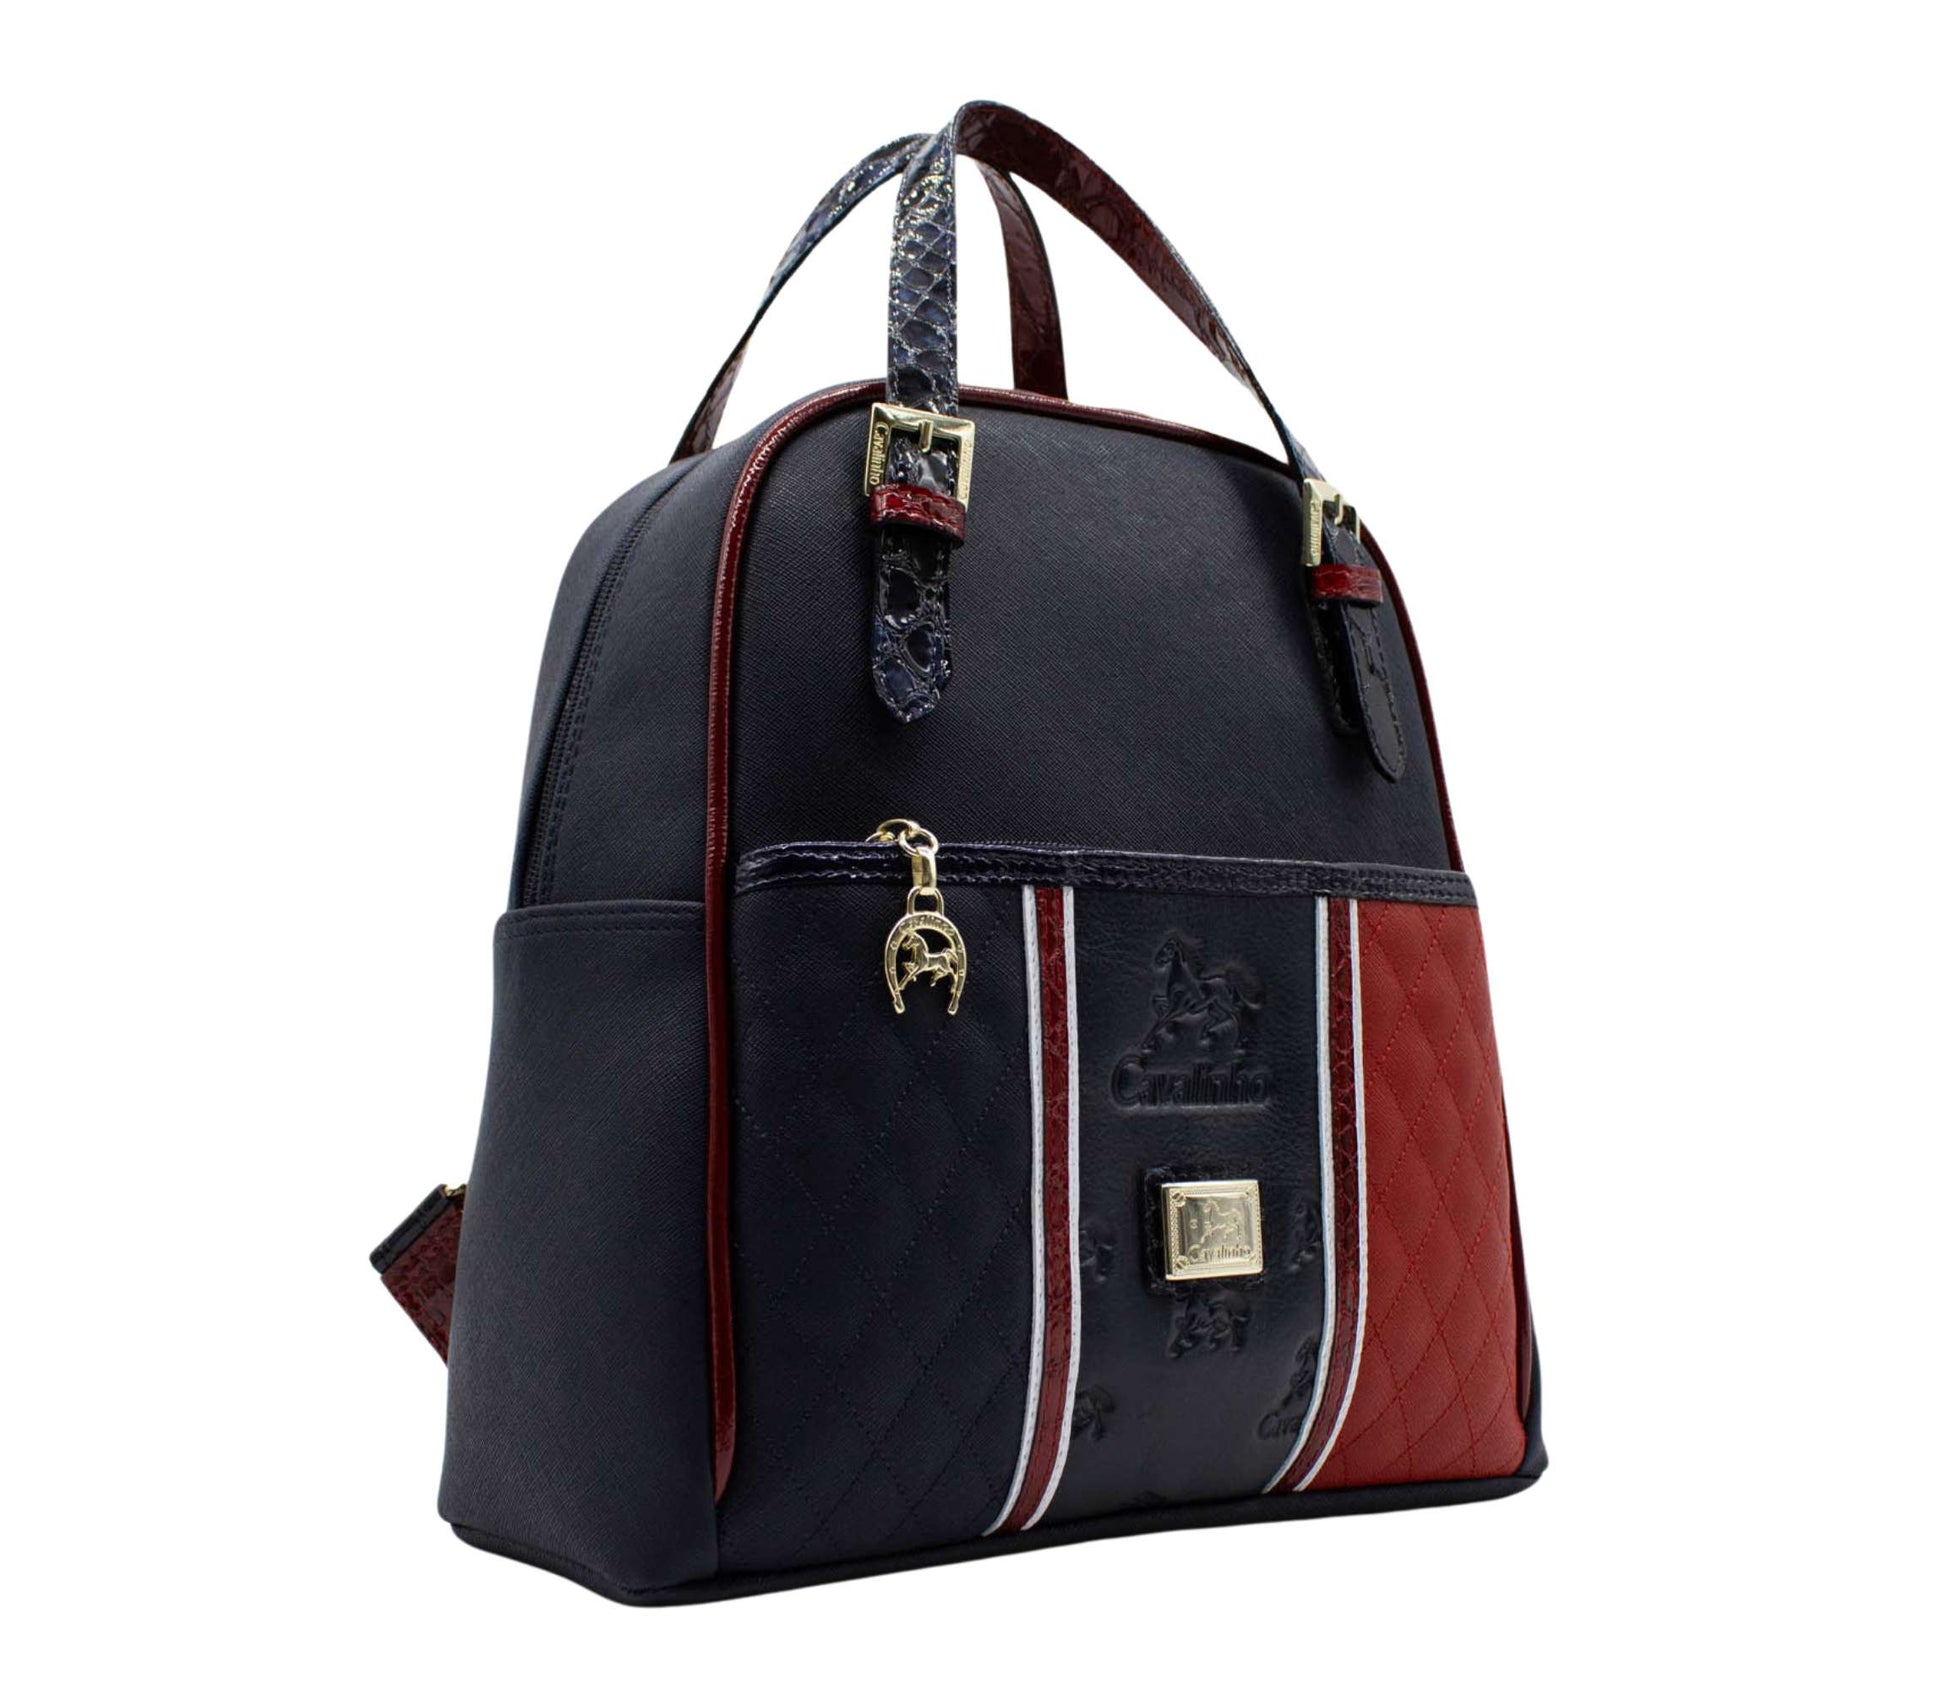 Cavalinho Prestige Backpack - Navy / White / Red - 18450519.22_2